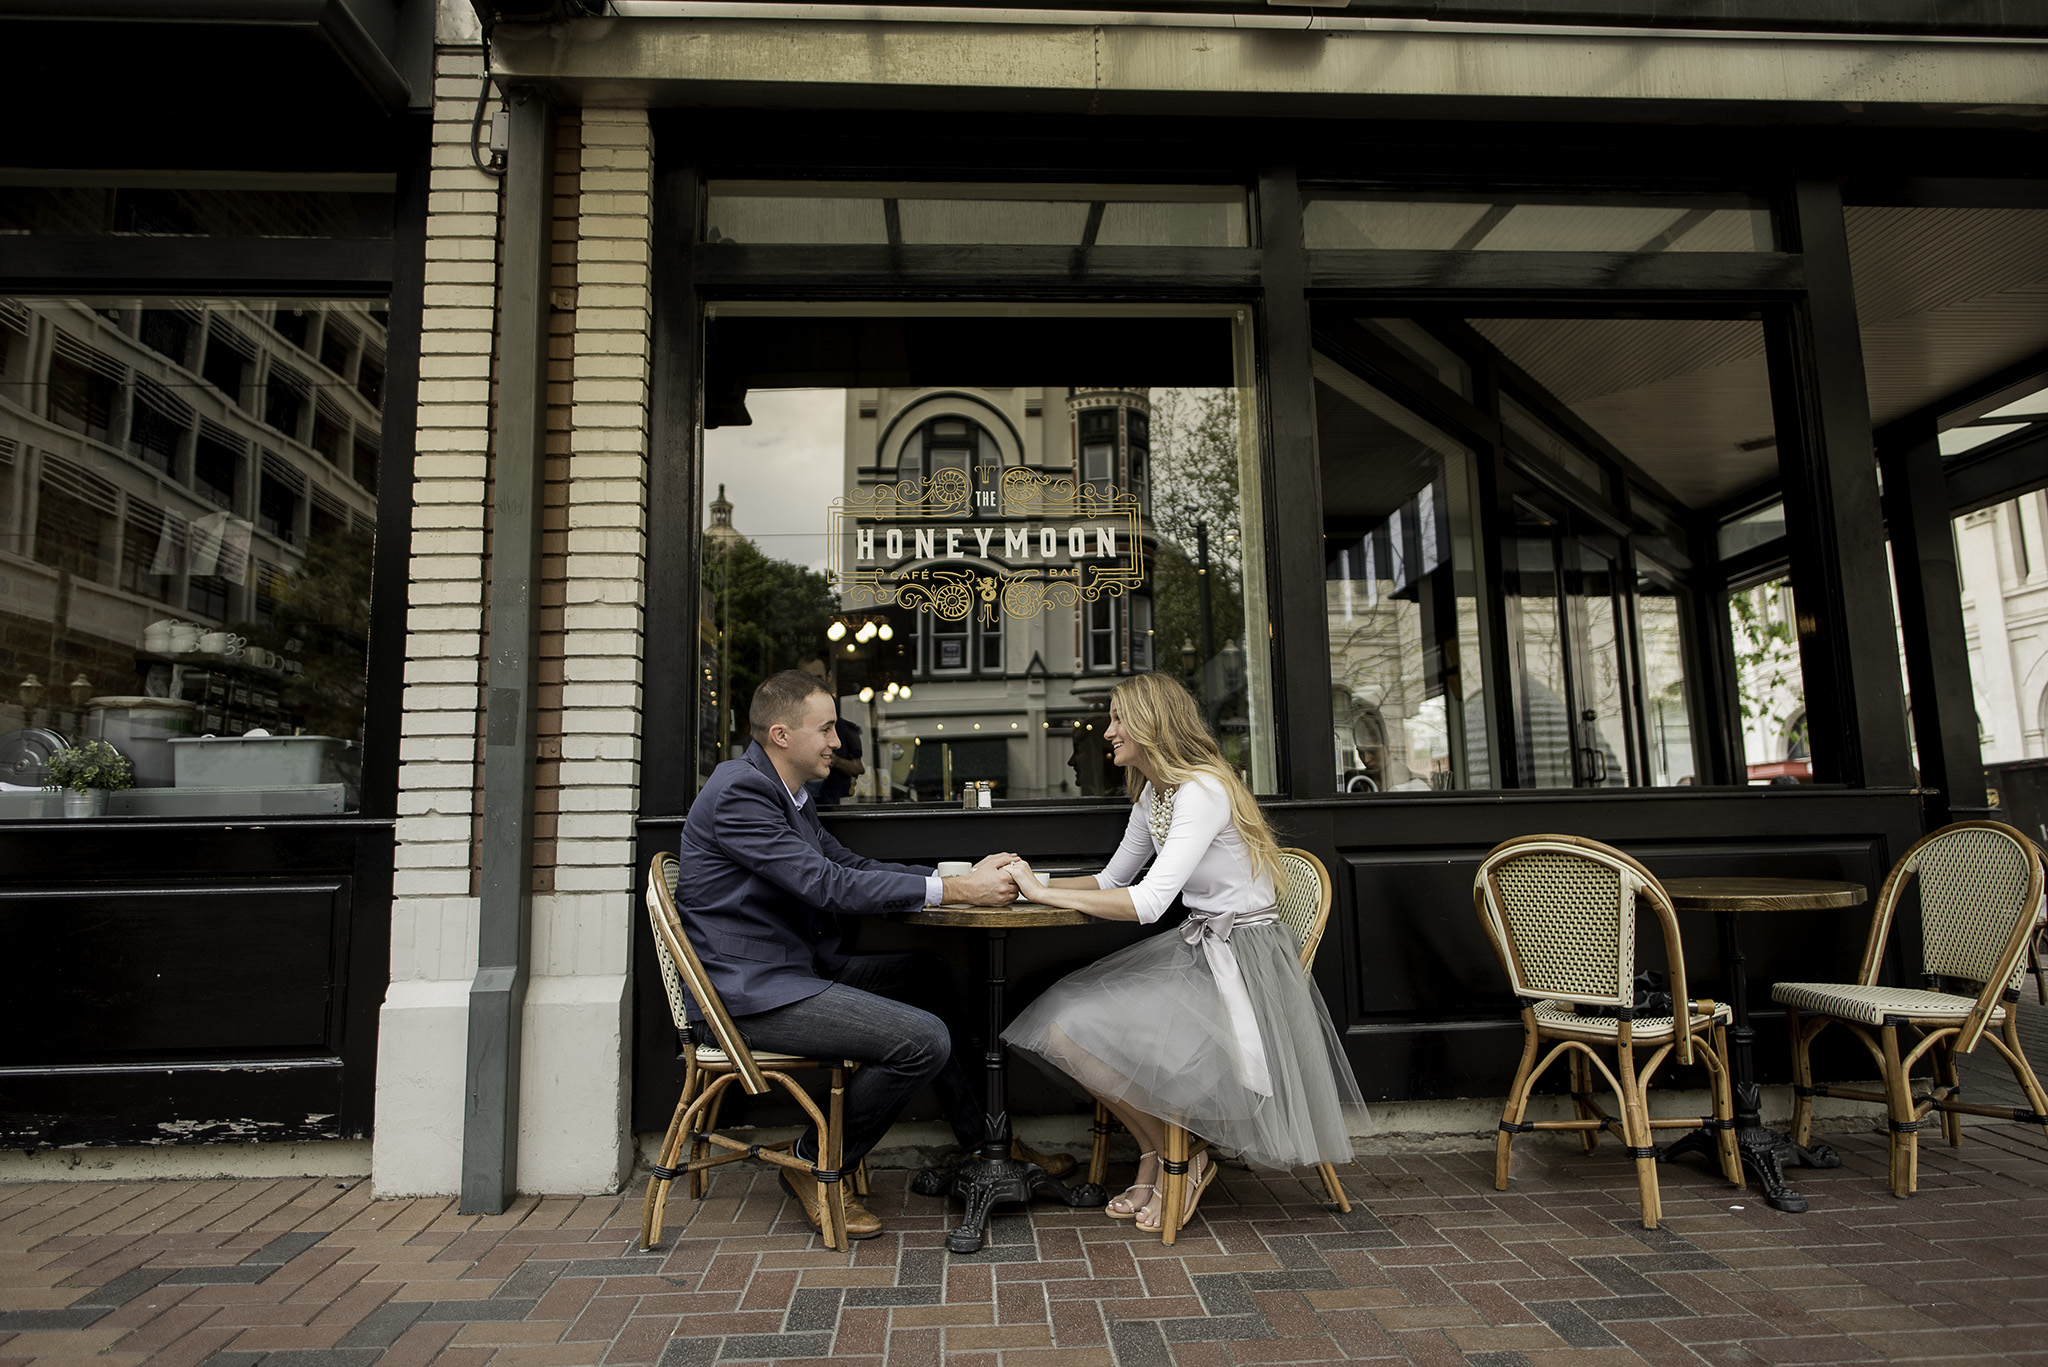 Houston-main-street-Honeymoon-cafe-lifestyle-engagement-session-004.jpg